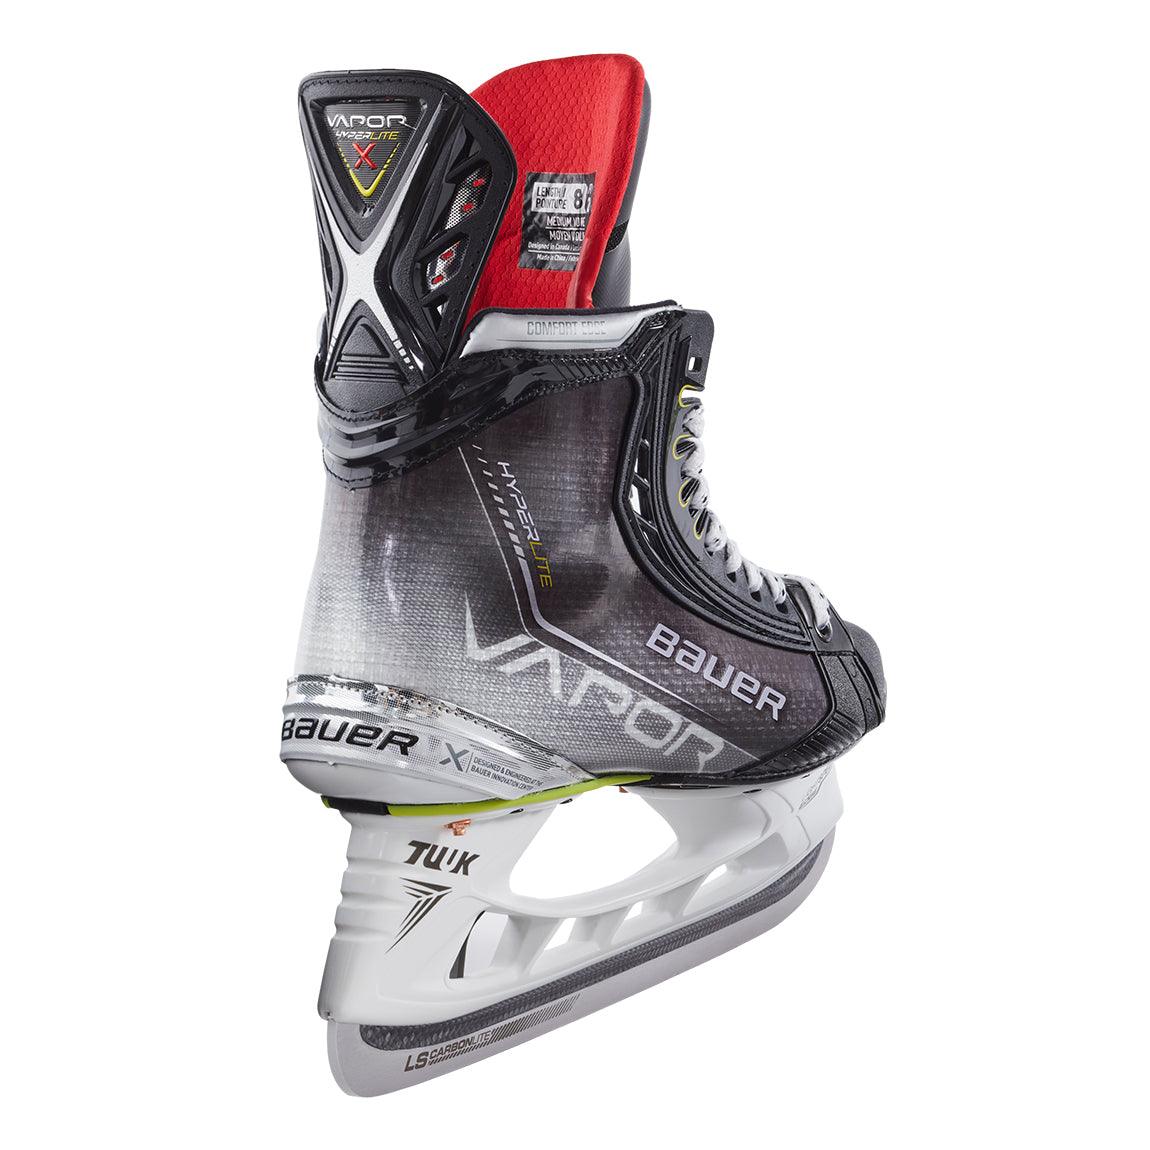 Vapor Hyperlite Carbonlite Hockey Skates - Intermediate - Sports Excellence